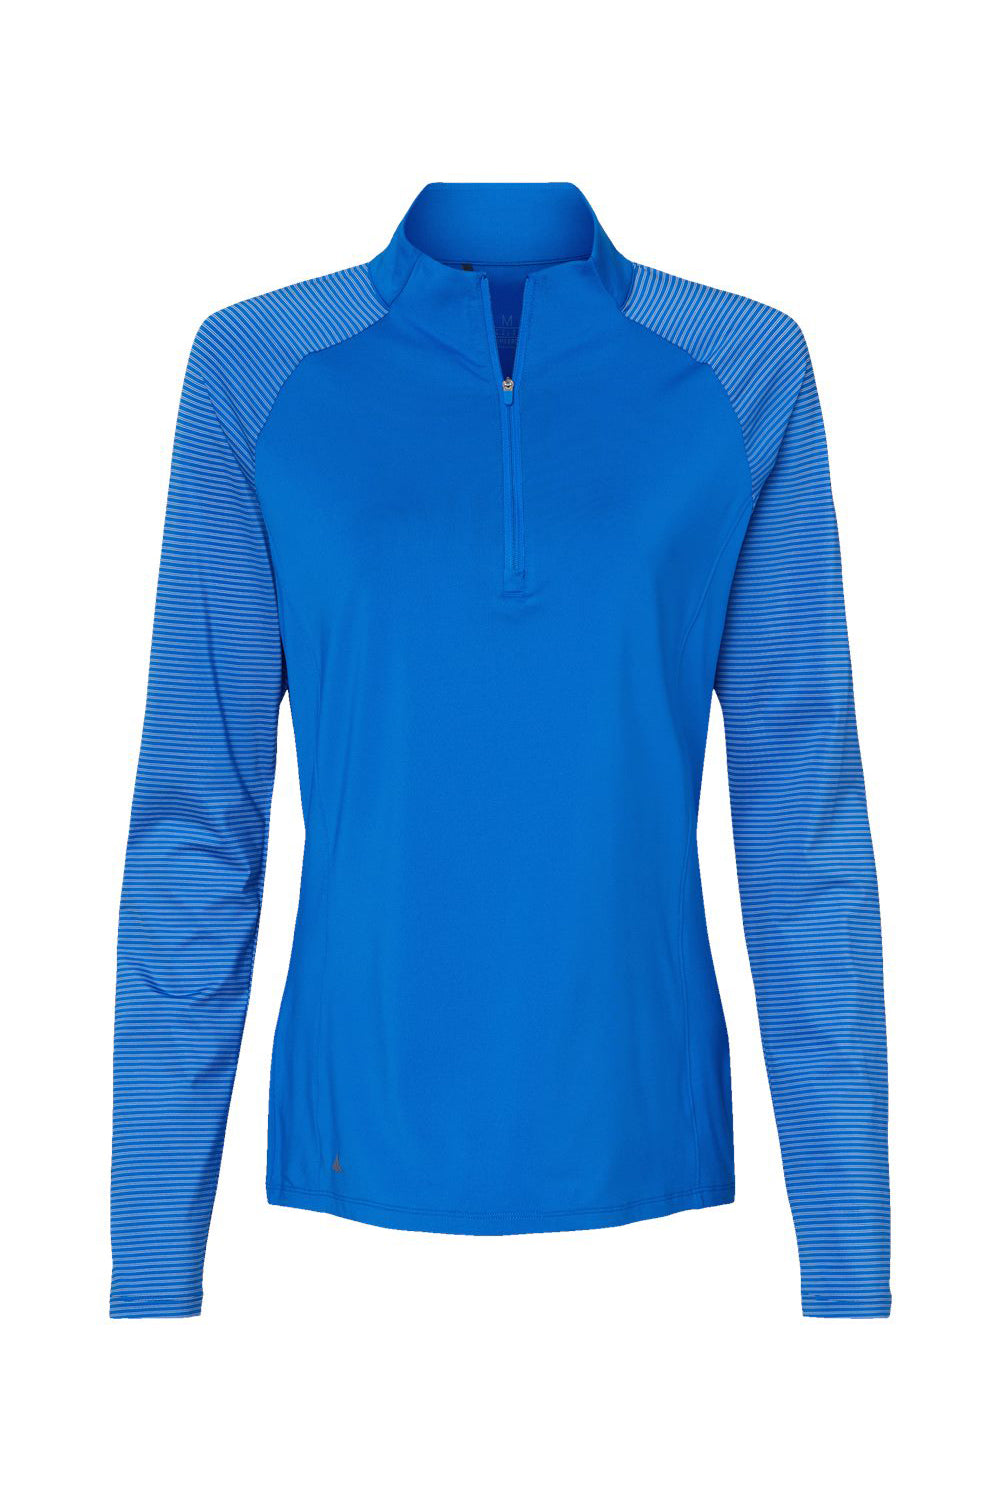 Adidas A521 Womens Stripe Block Moisture Wicking 1/4 Zip Sweatshirt Glory Blue Flat Front